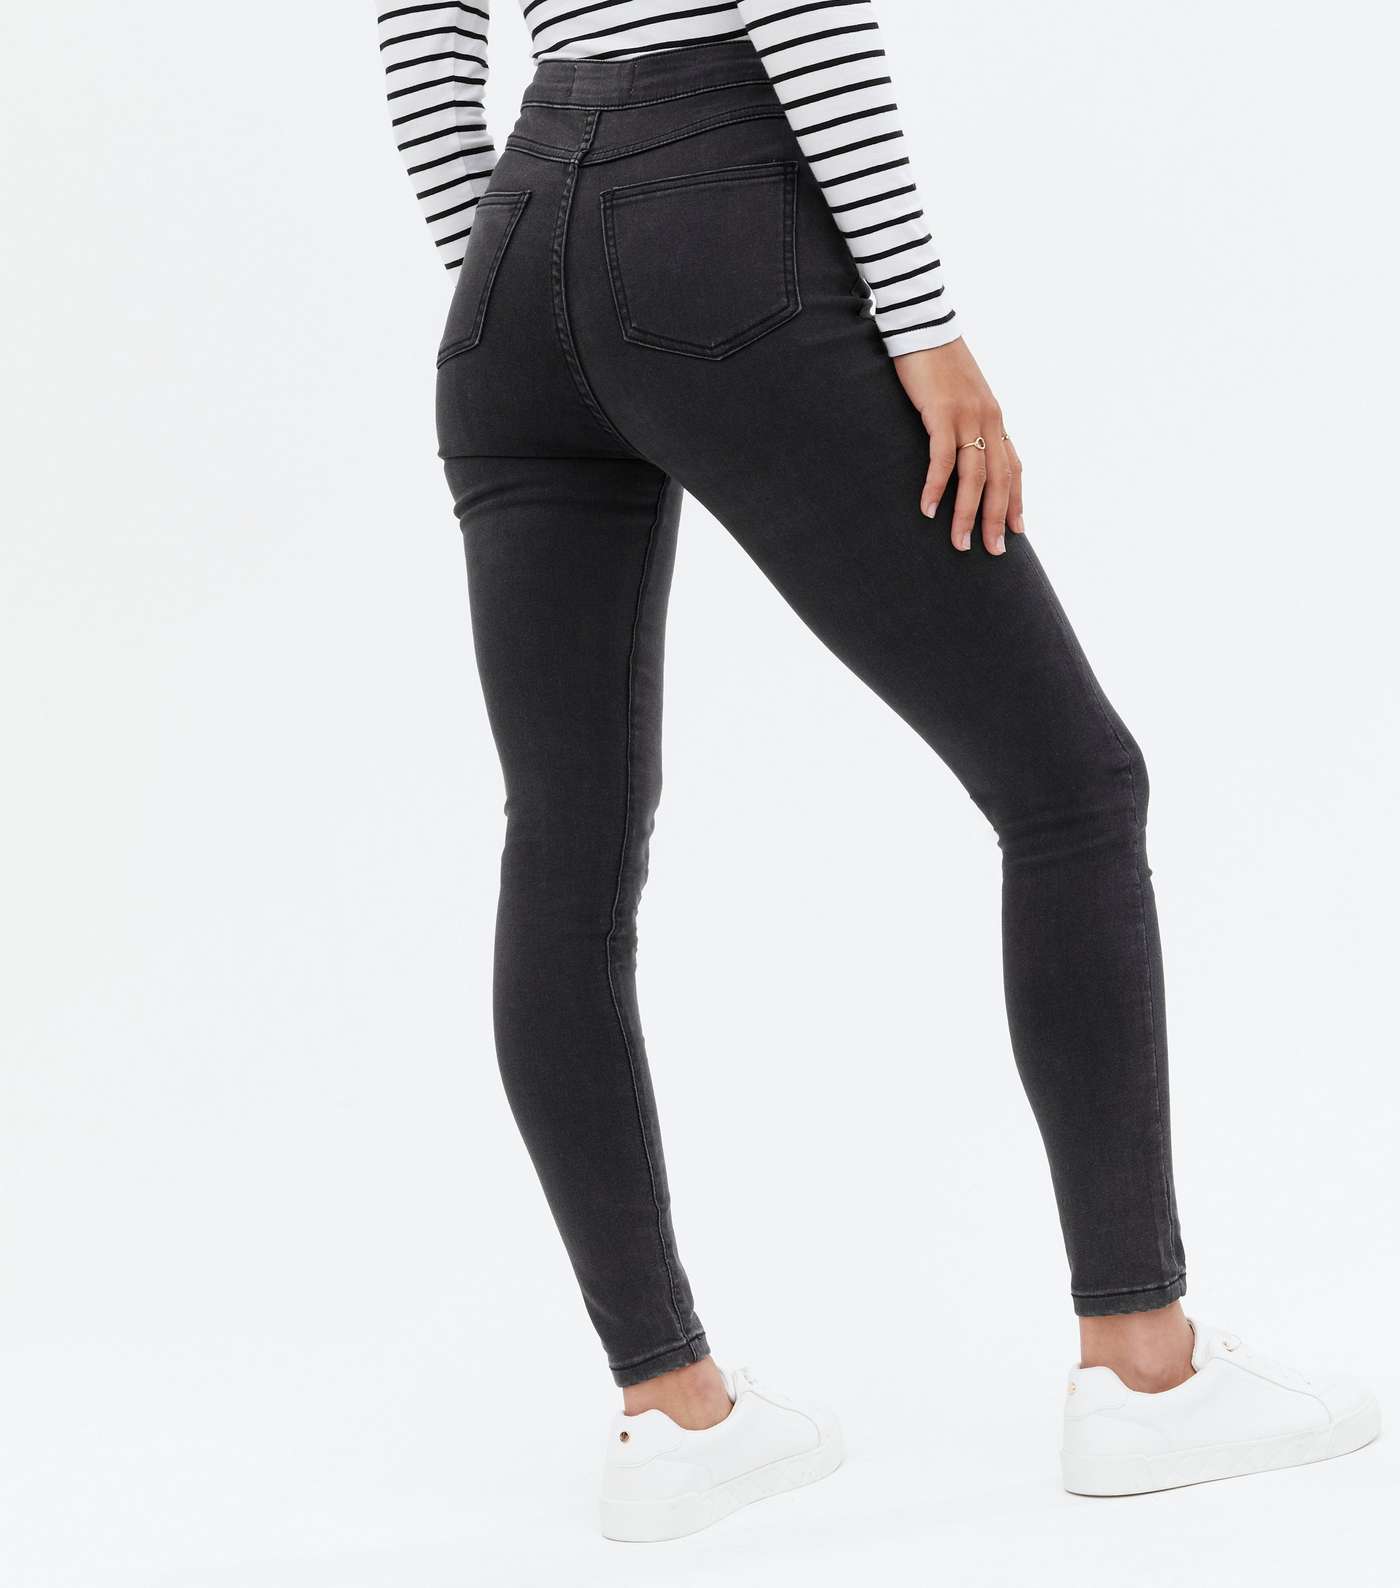 Black High Waist Hallie Super Skinny Jeans Image 2